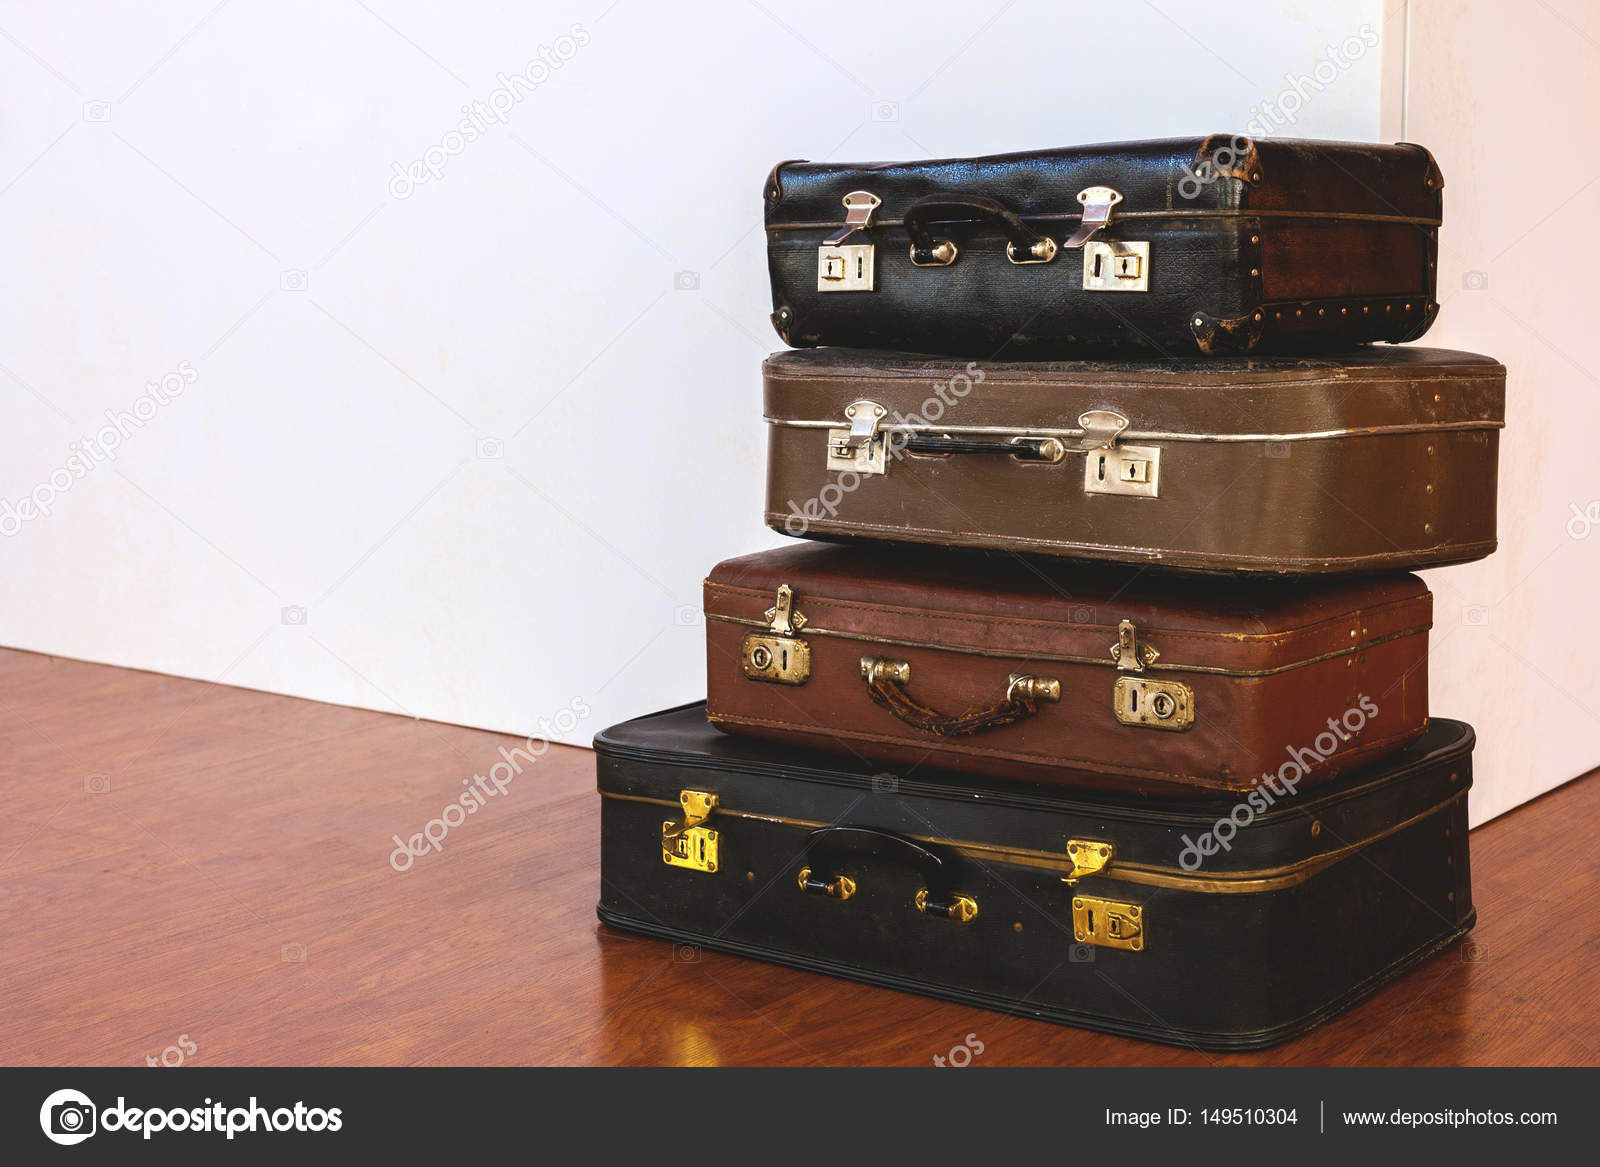 inden for Blaze Anzai Gammel bunke gamle kufferter. Design og rejsekoncept — Stock-foto ©  julie.kononenko@gmail.com #149510304